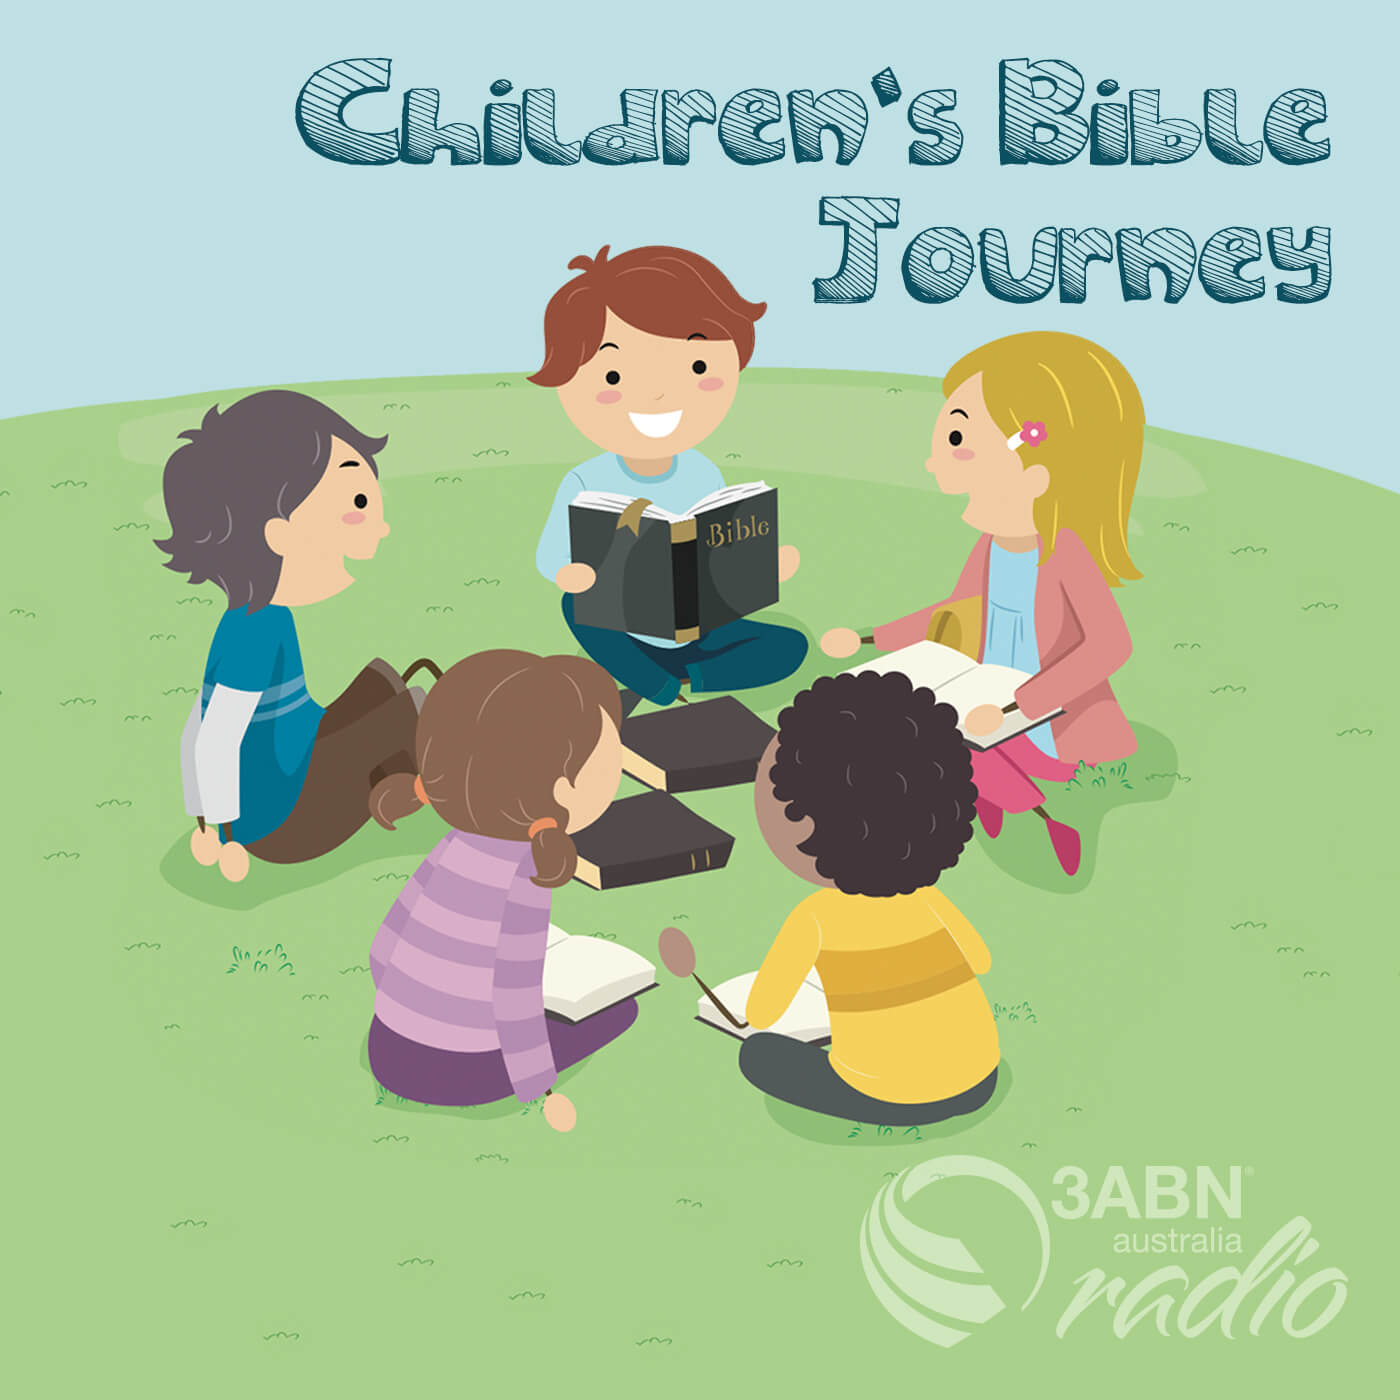 Children's Bible Journey - 2008